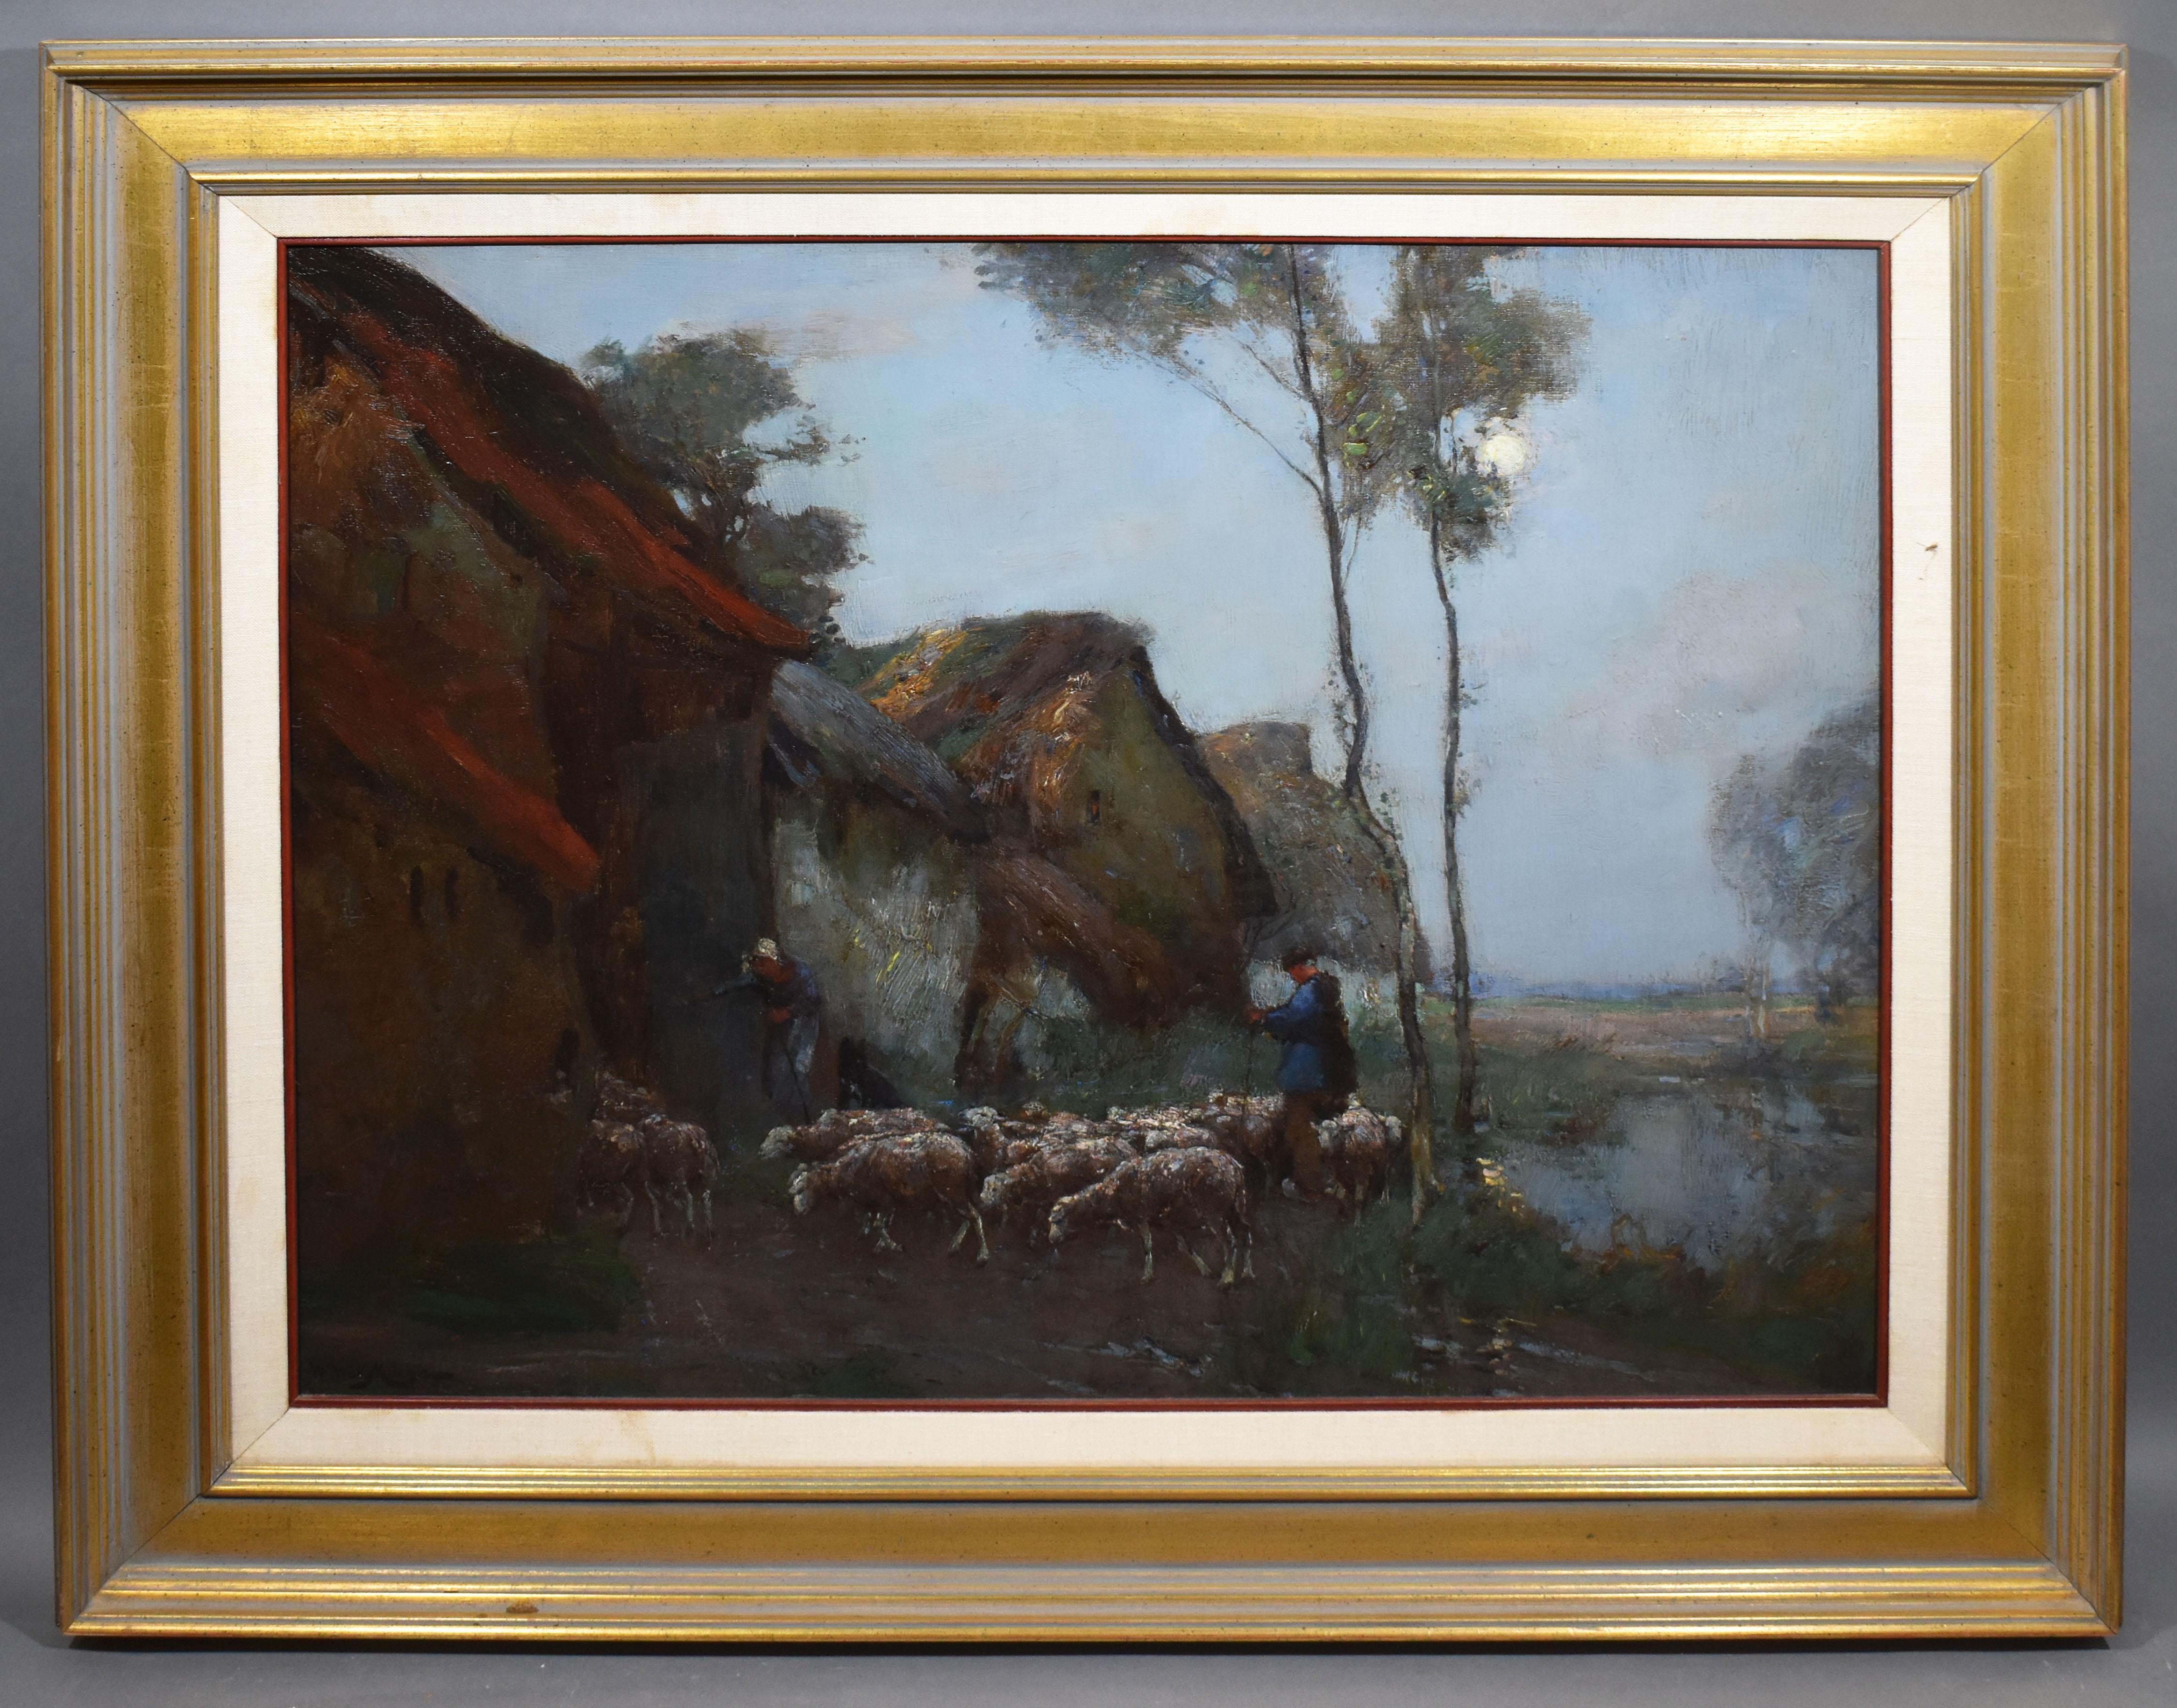 Antique Barbizon School Moonlit Sheepherding Landscape Signed Large Oil Painting - Brown Landscape Painting by Unknown